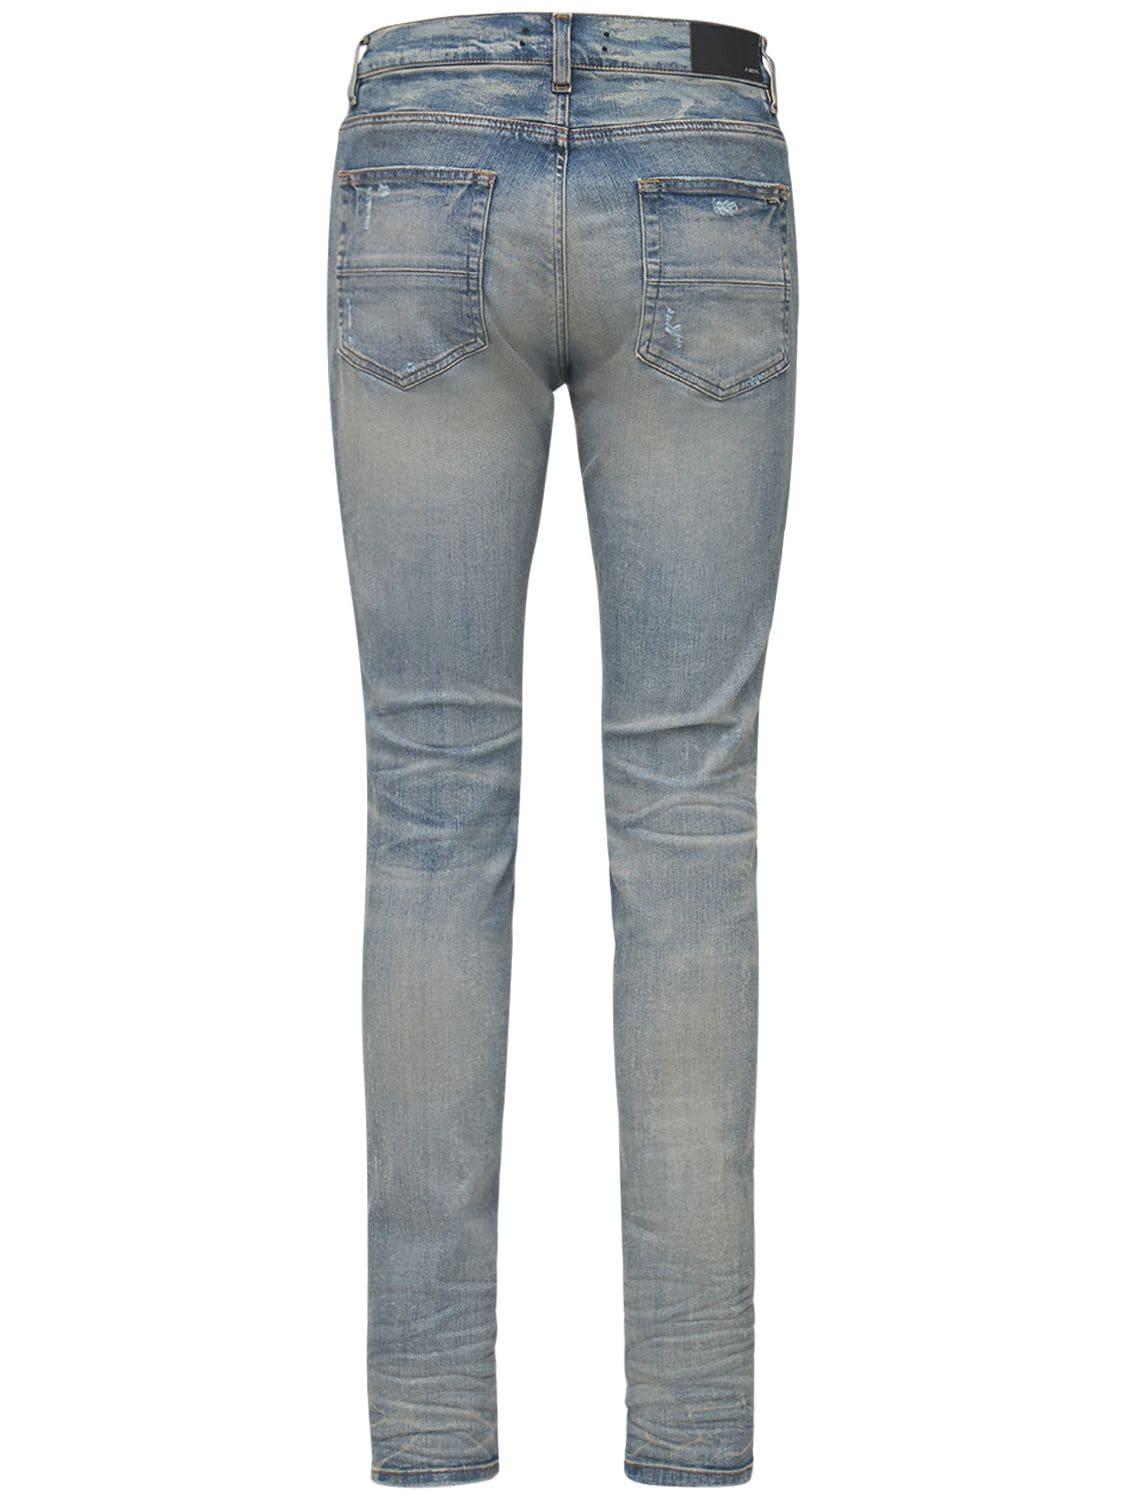 Amiri Varsity Patch Denim Jeans in Blue for Men - Lyst